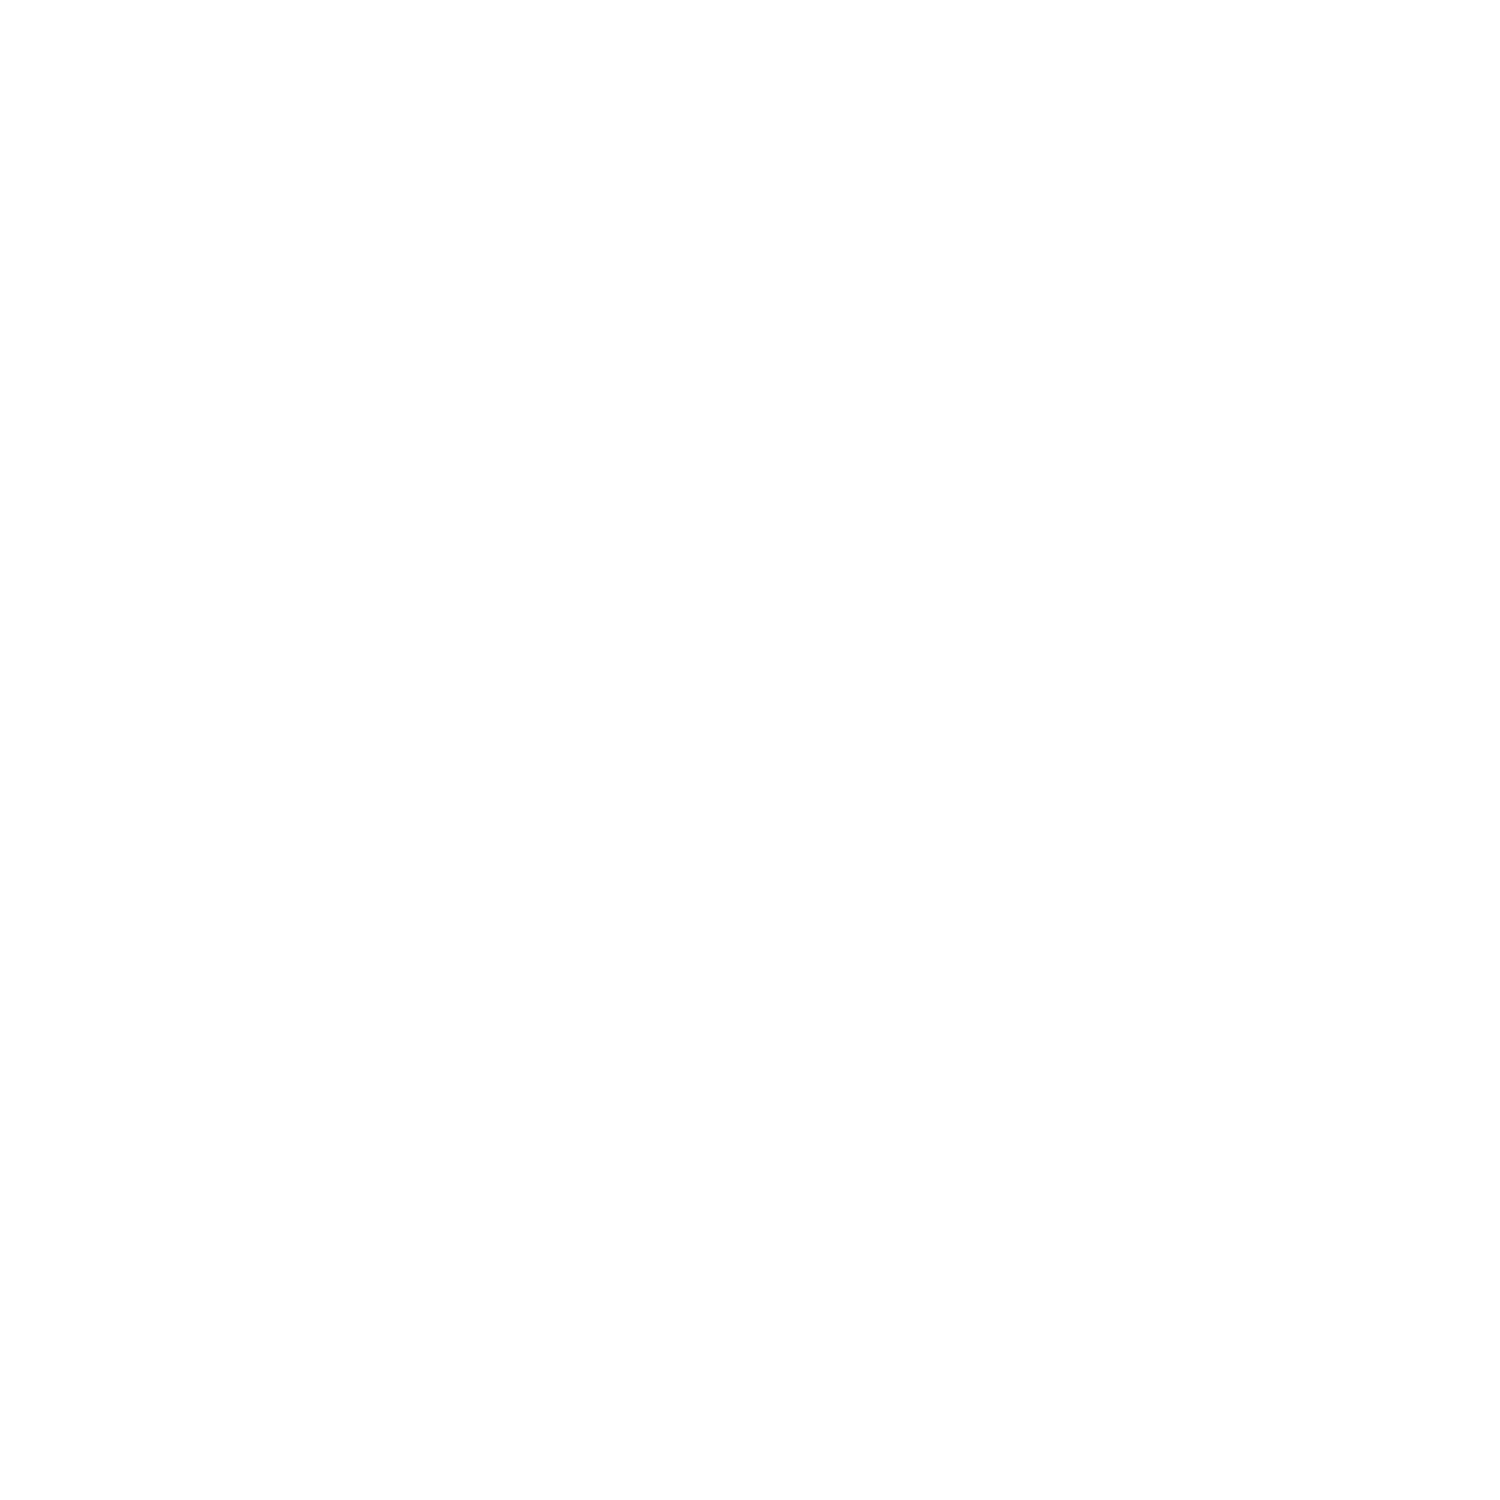 ATHENE NUTRITION